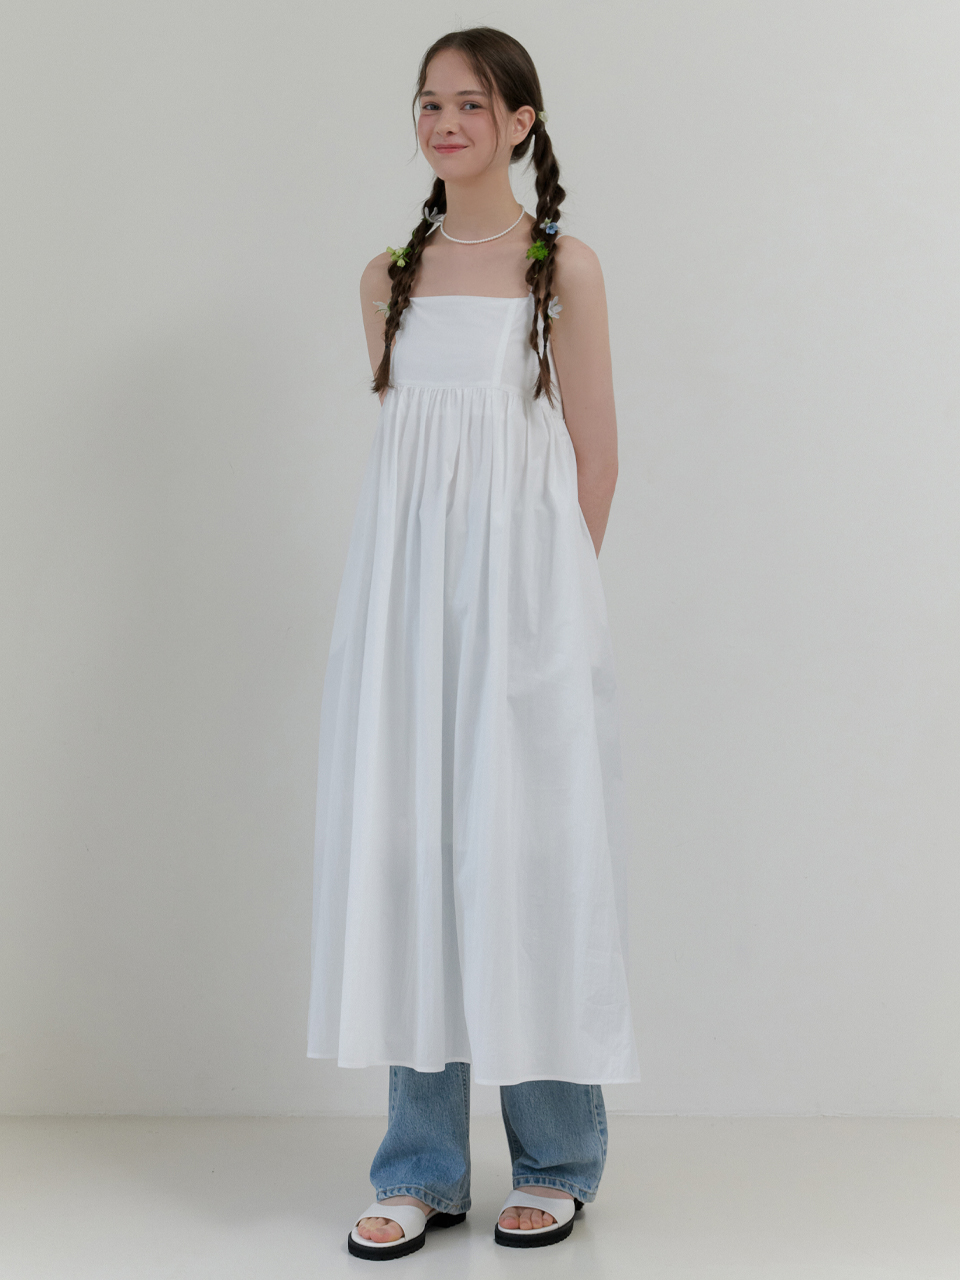 Backless strap dress (white)